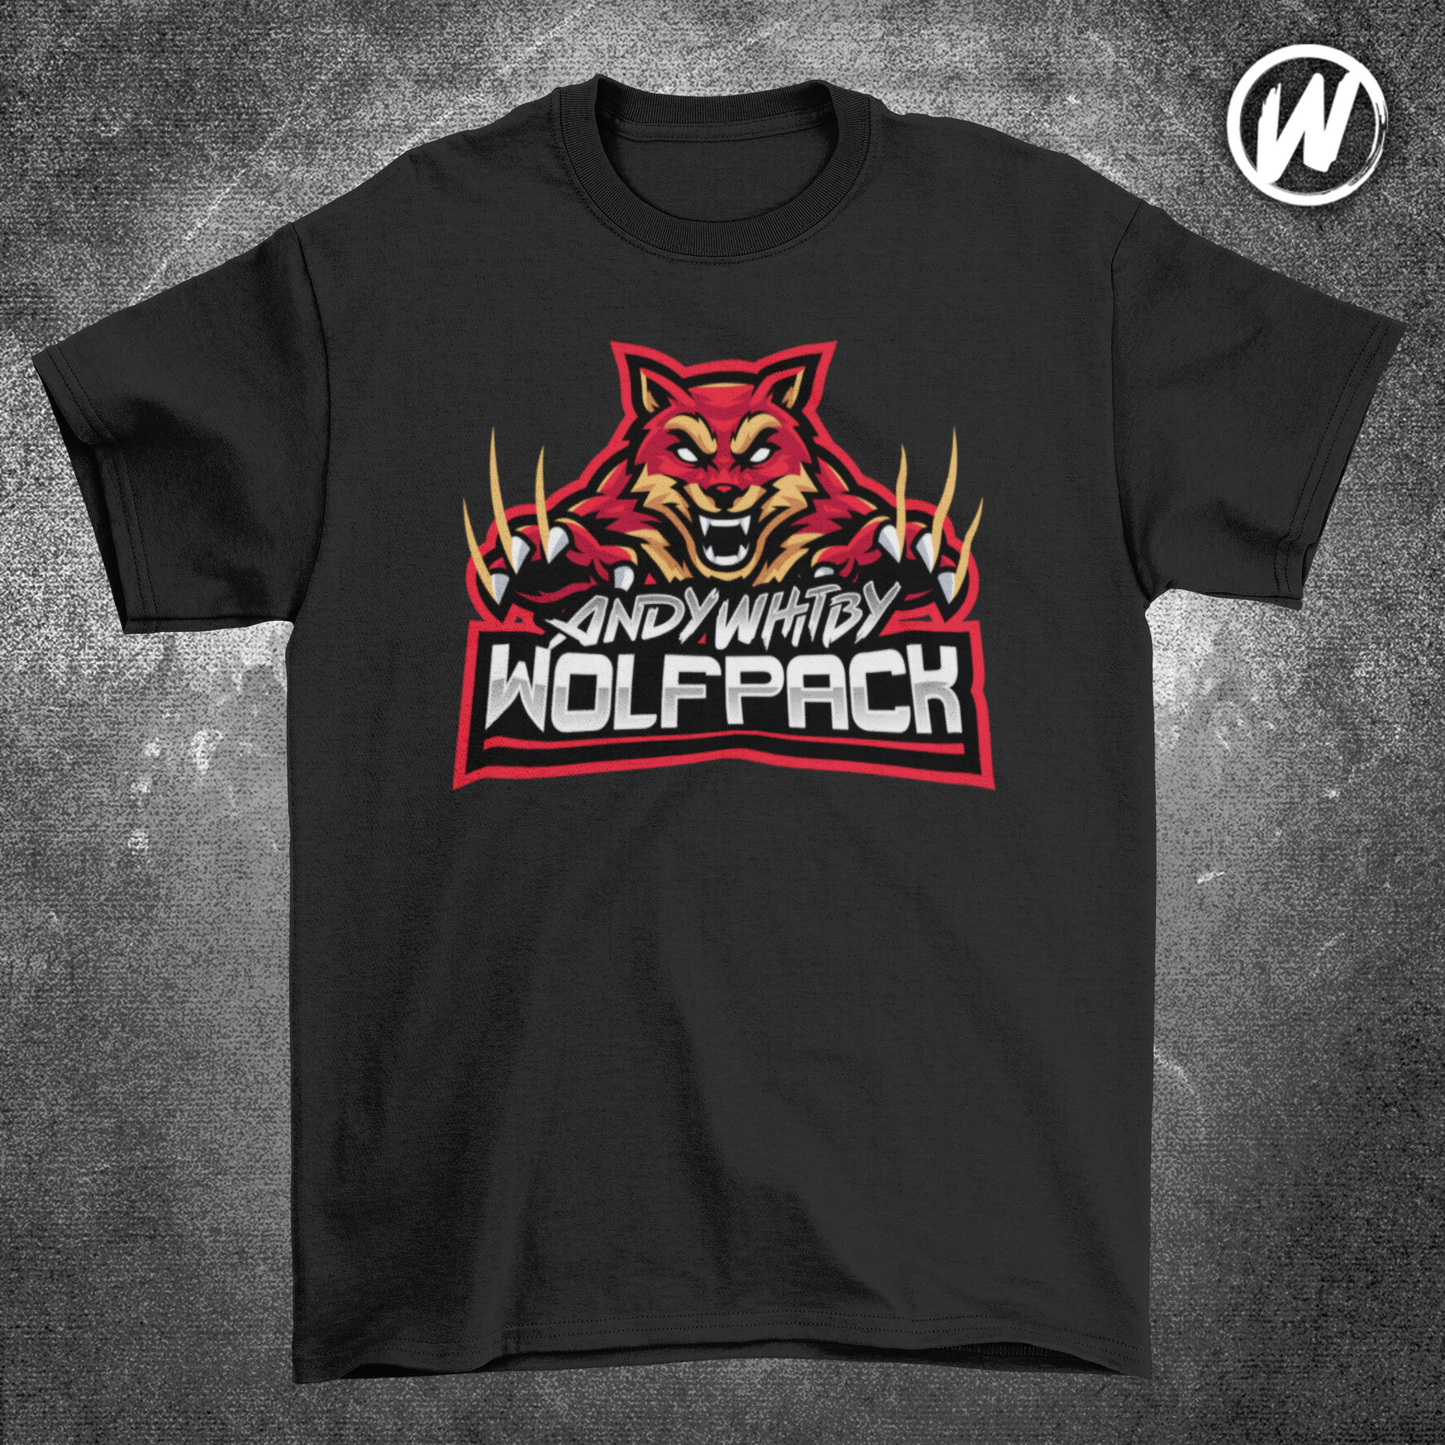 Wolfpack Black t-shirt (red logo)